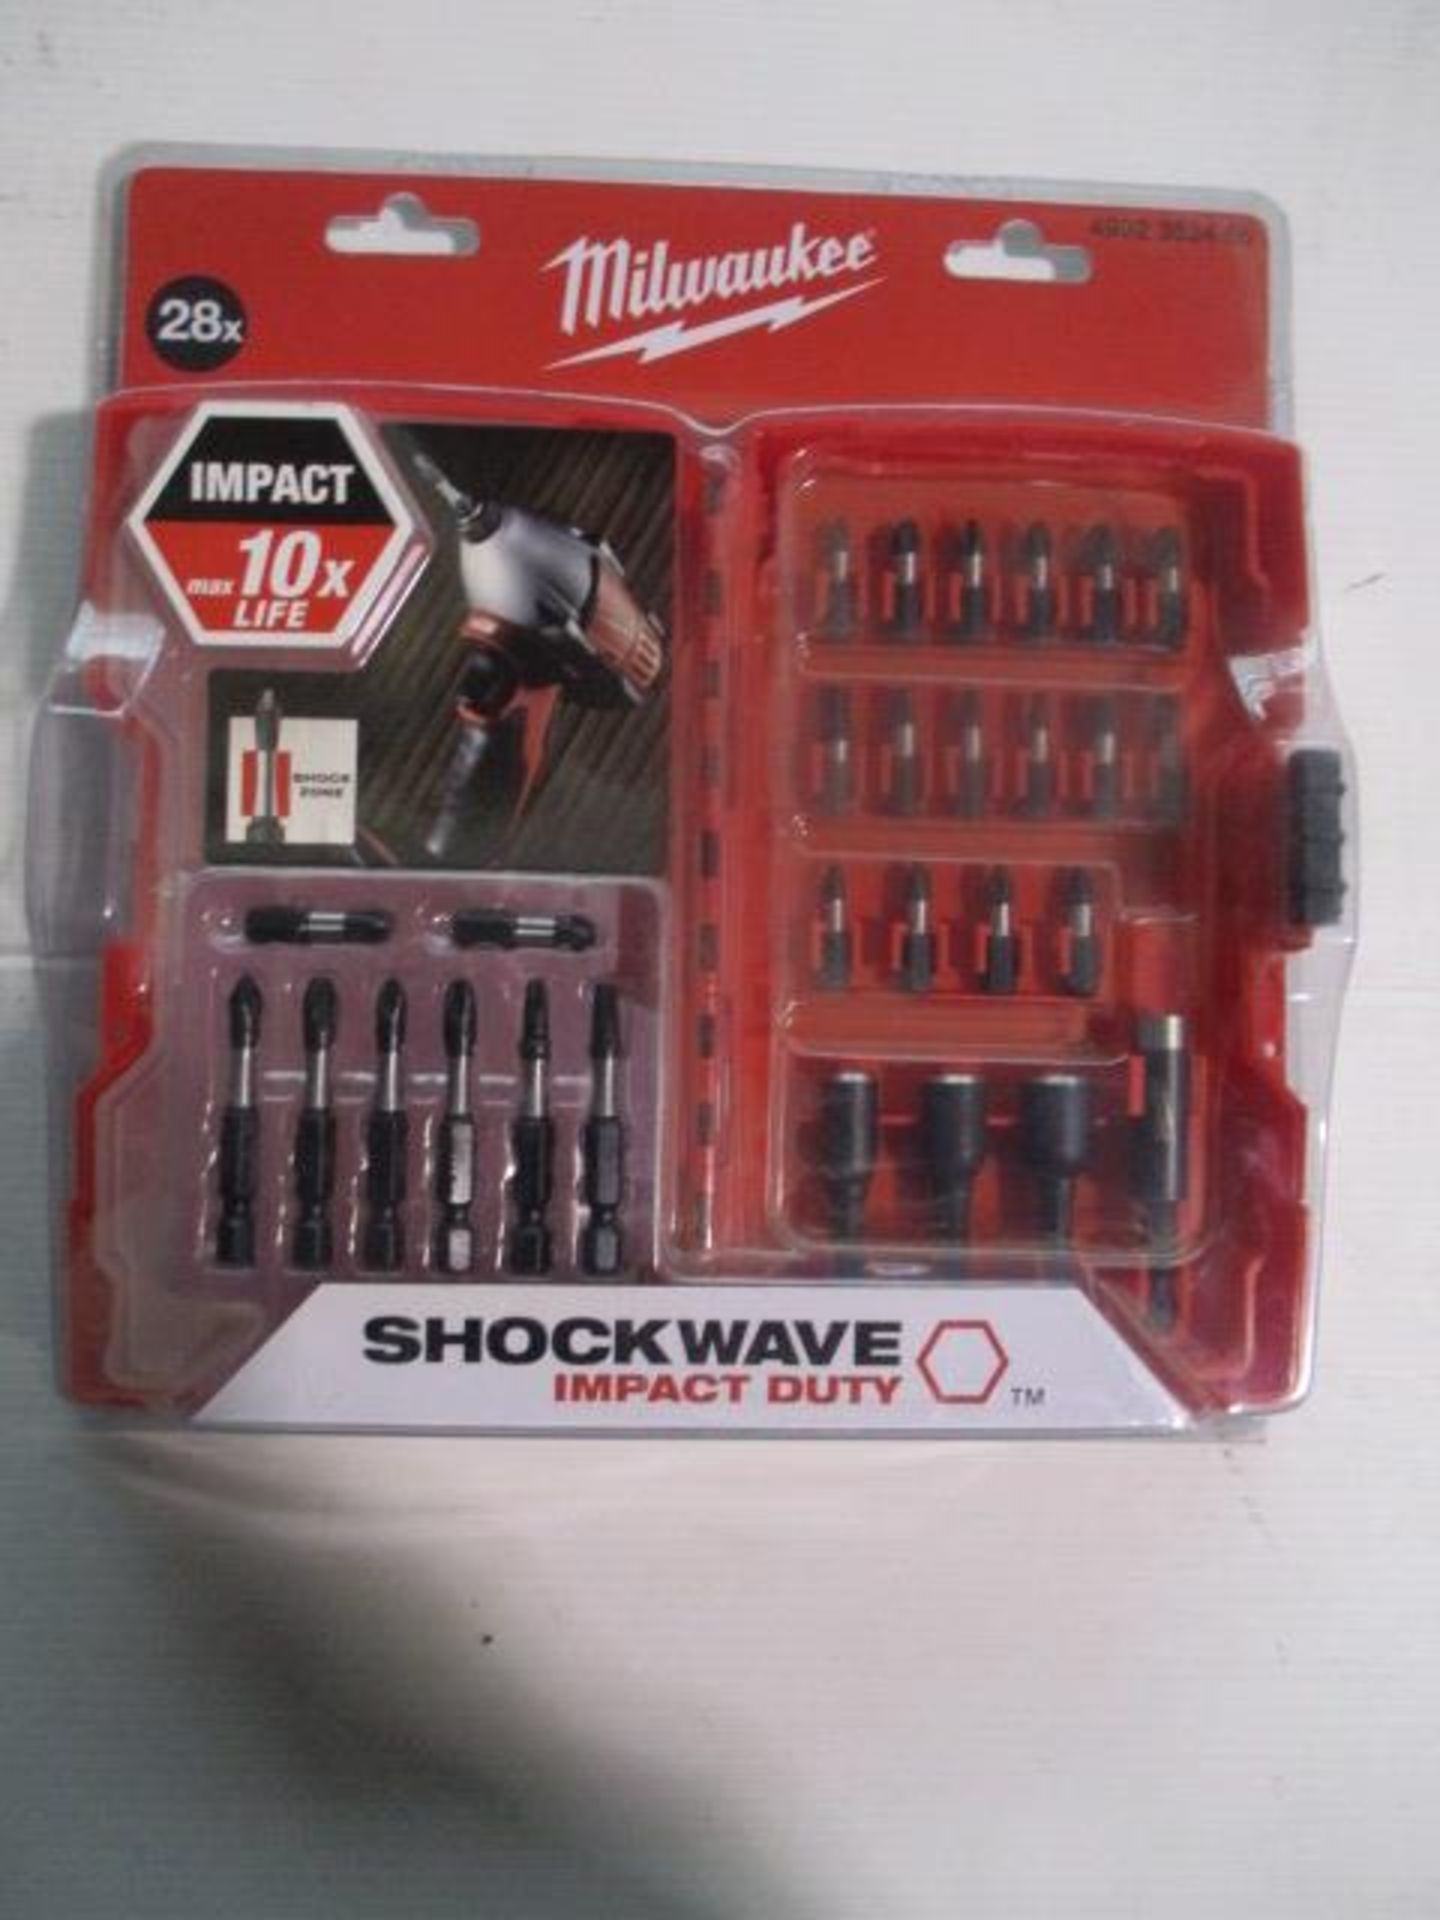 1pc Milwaukee Brand new Sealed Shockwave 28pc Bit set in hard shell case original rrp £39.99.